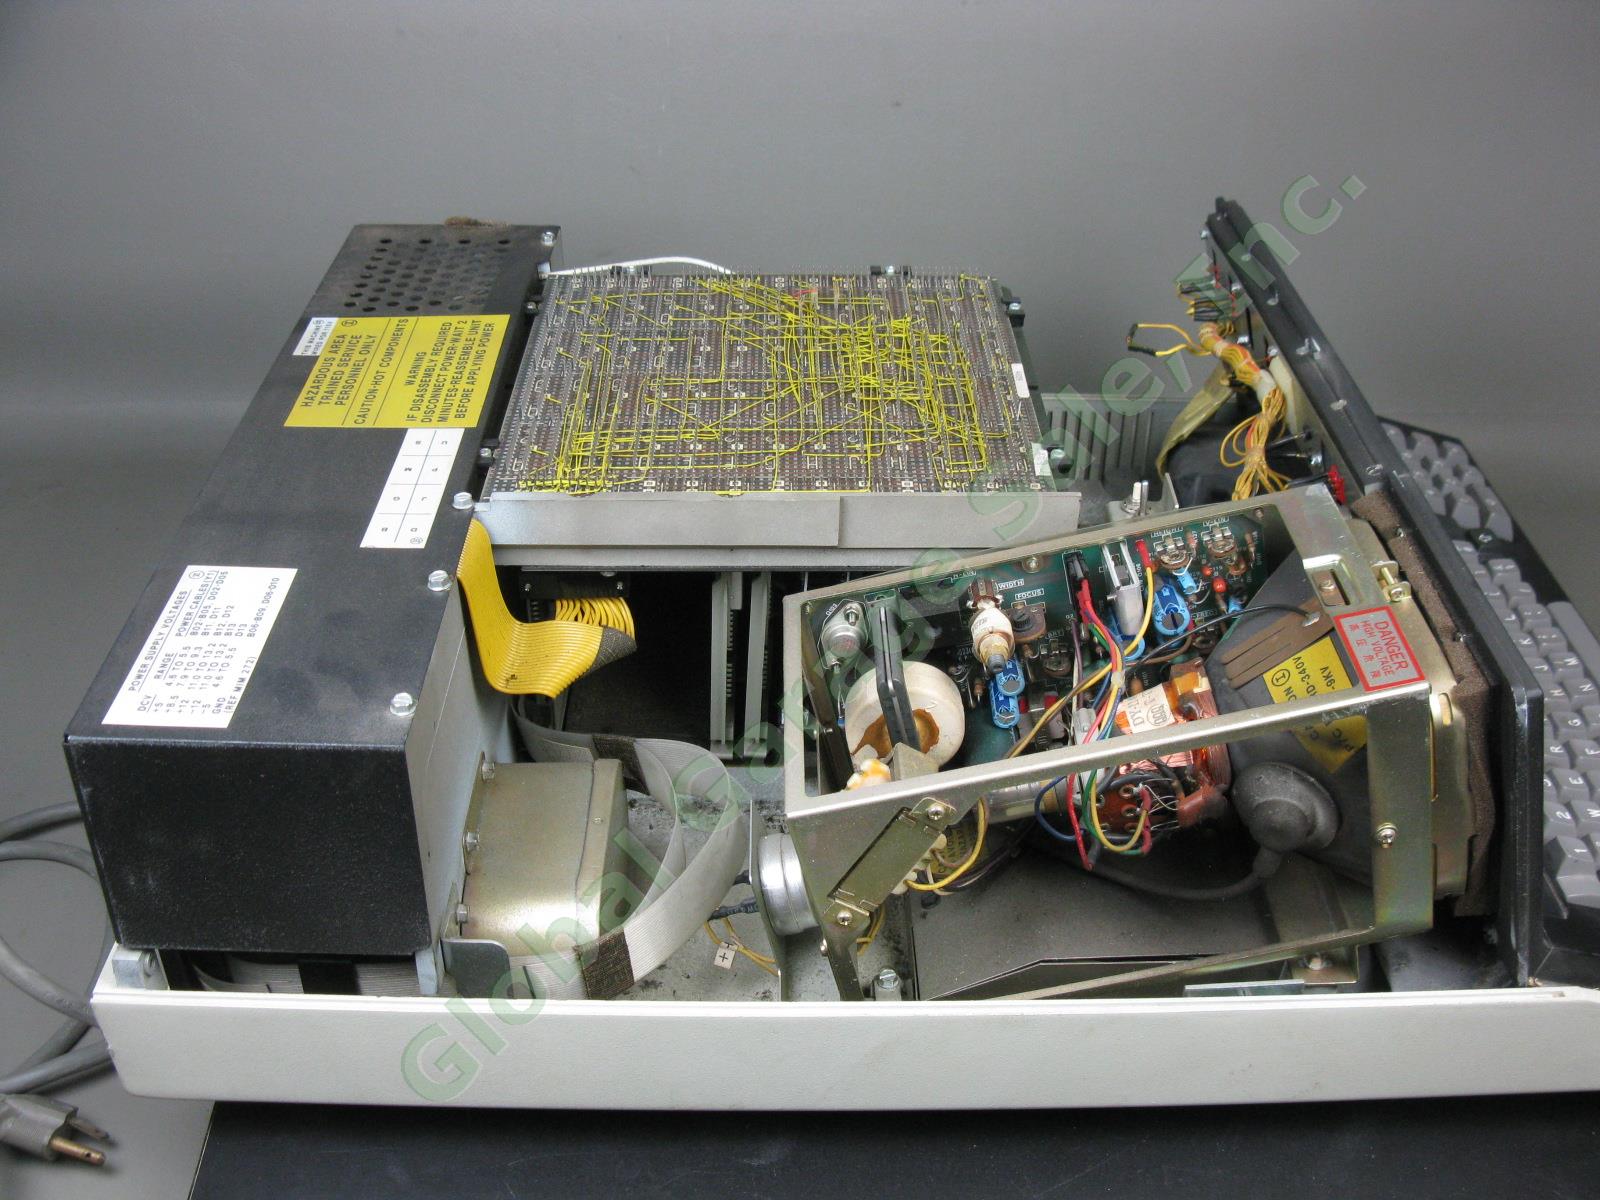 Vtg 1979 IBM 5110 Computing System Portable PC Computer 1.9MHz 16K-64K RAM BASIC 12